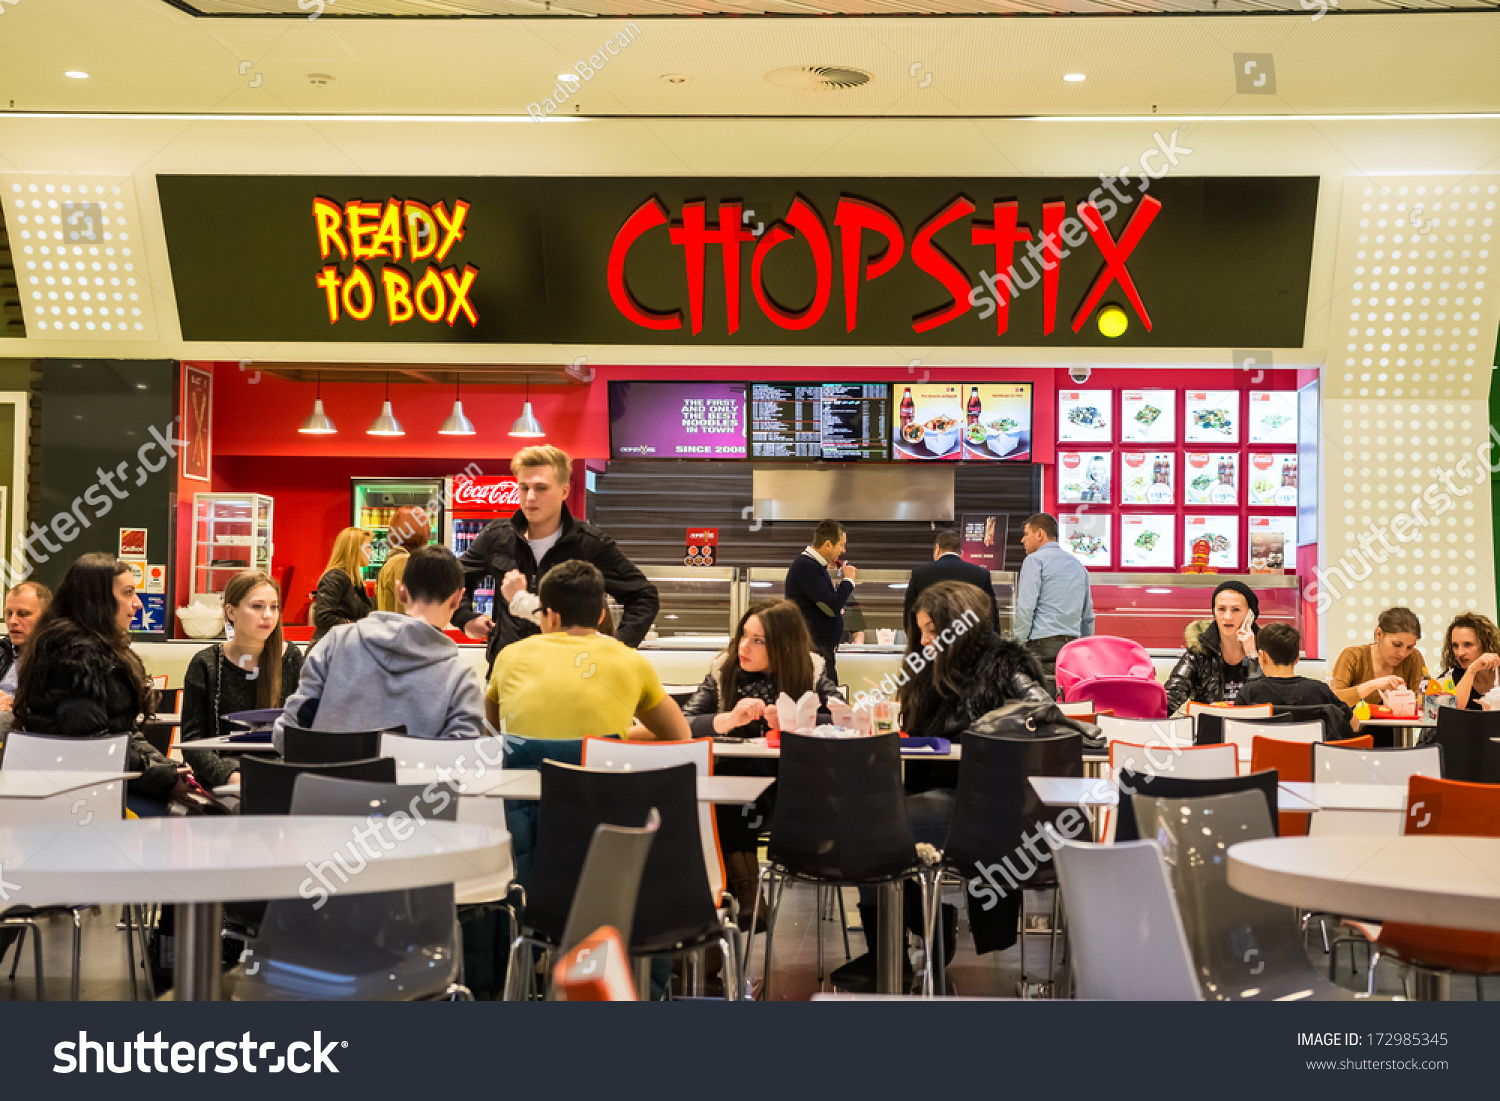 chopstix restaurant